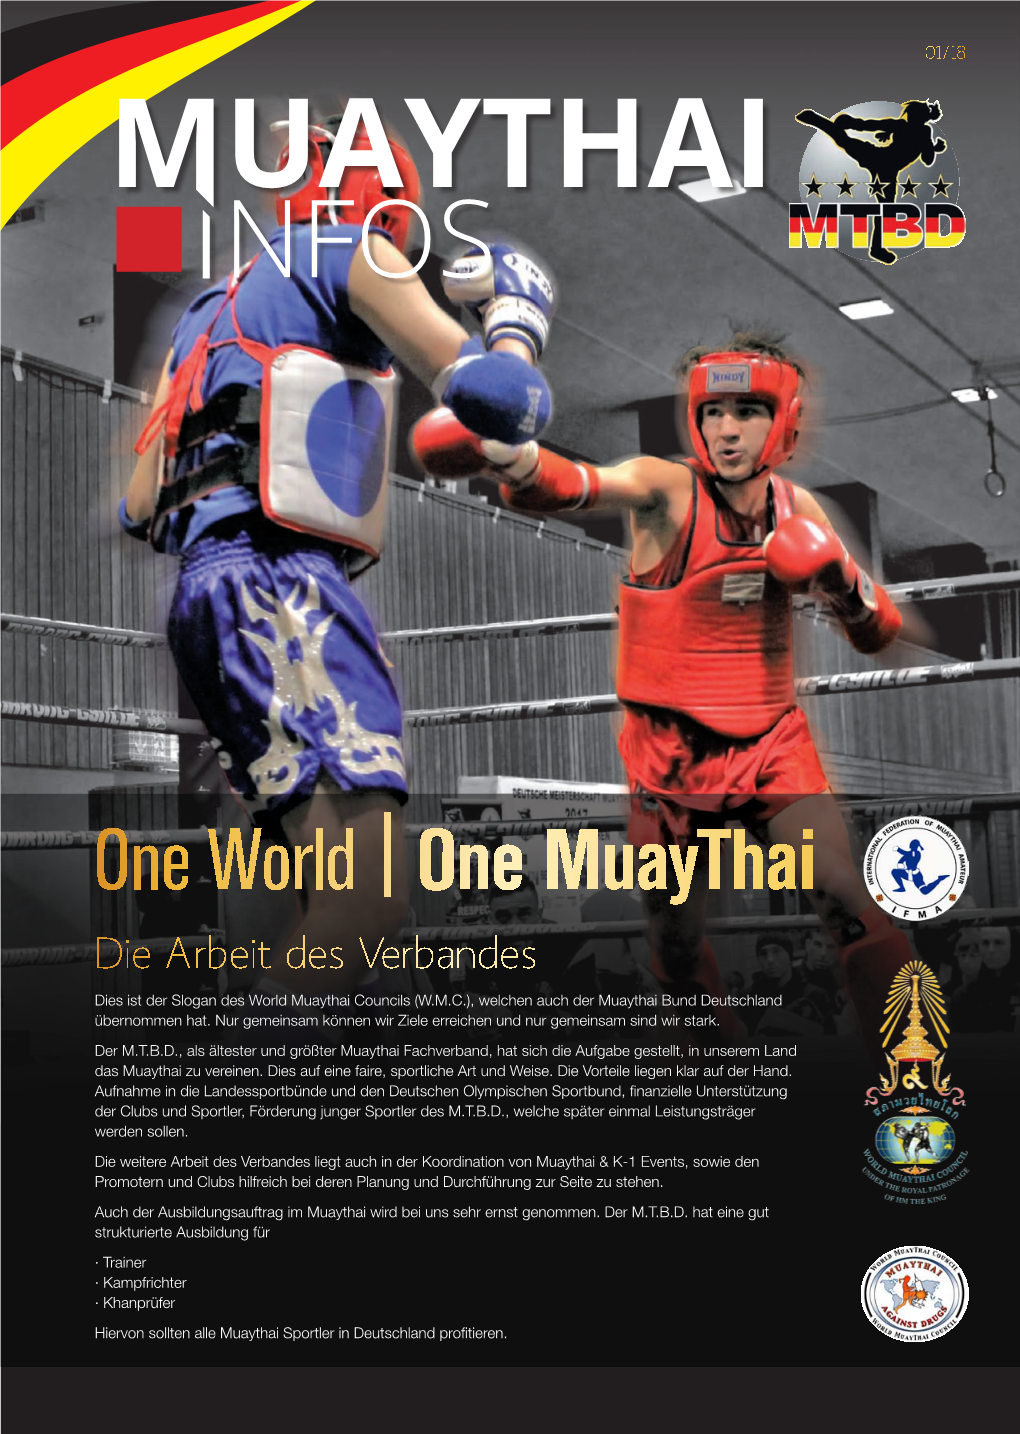 One World |One Muaythai